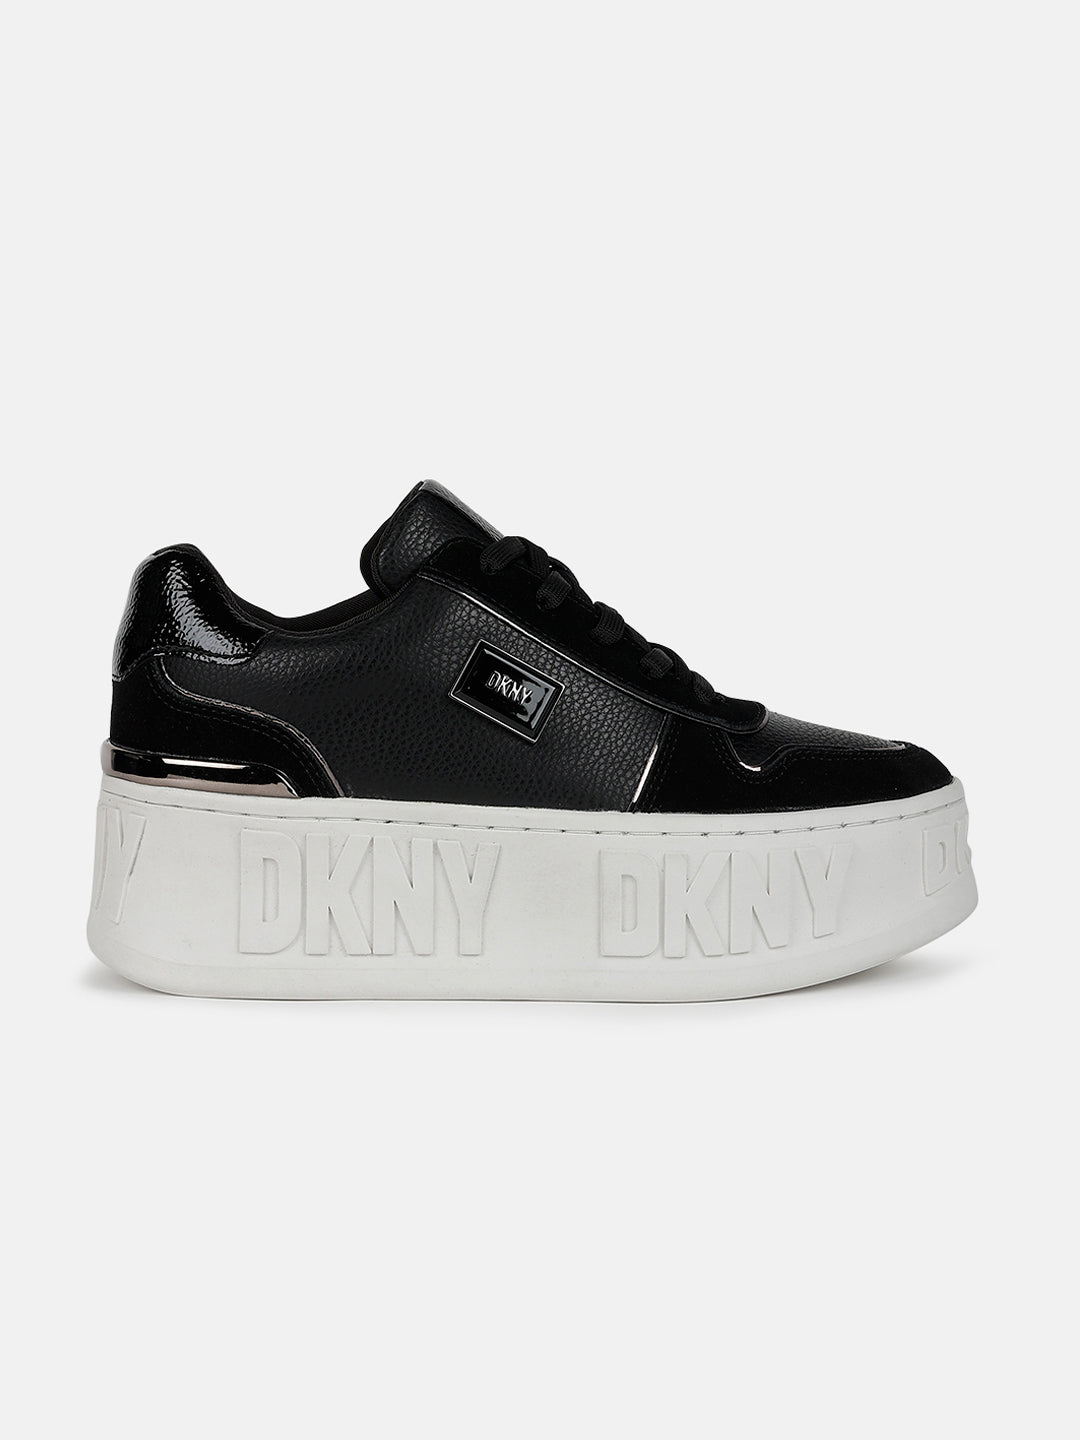 DKNY Bari Platform Sneakers Gray Shoes Size 9 | eBay